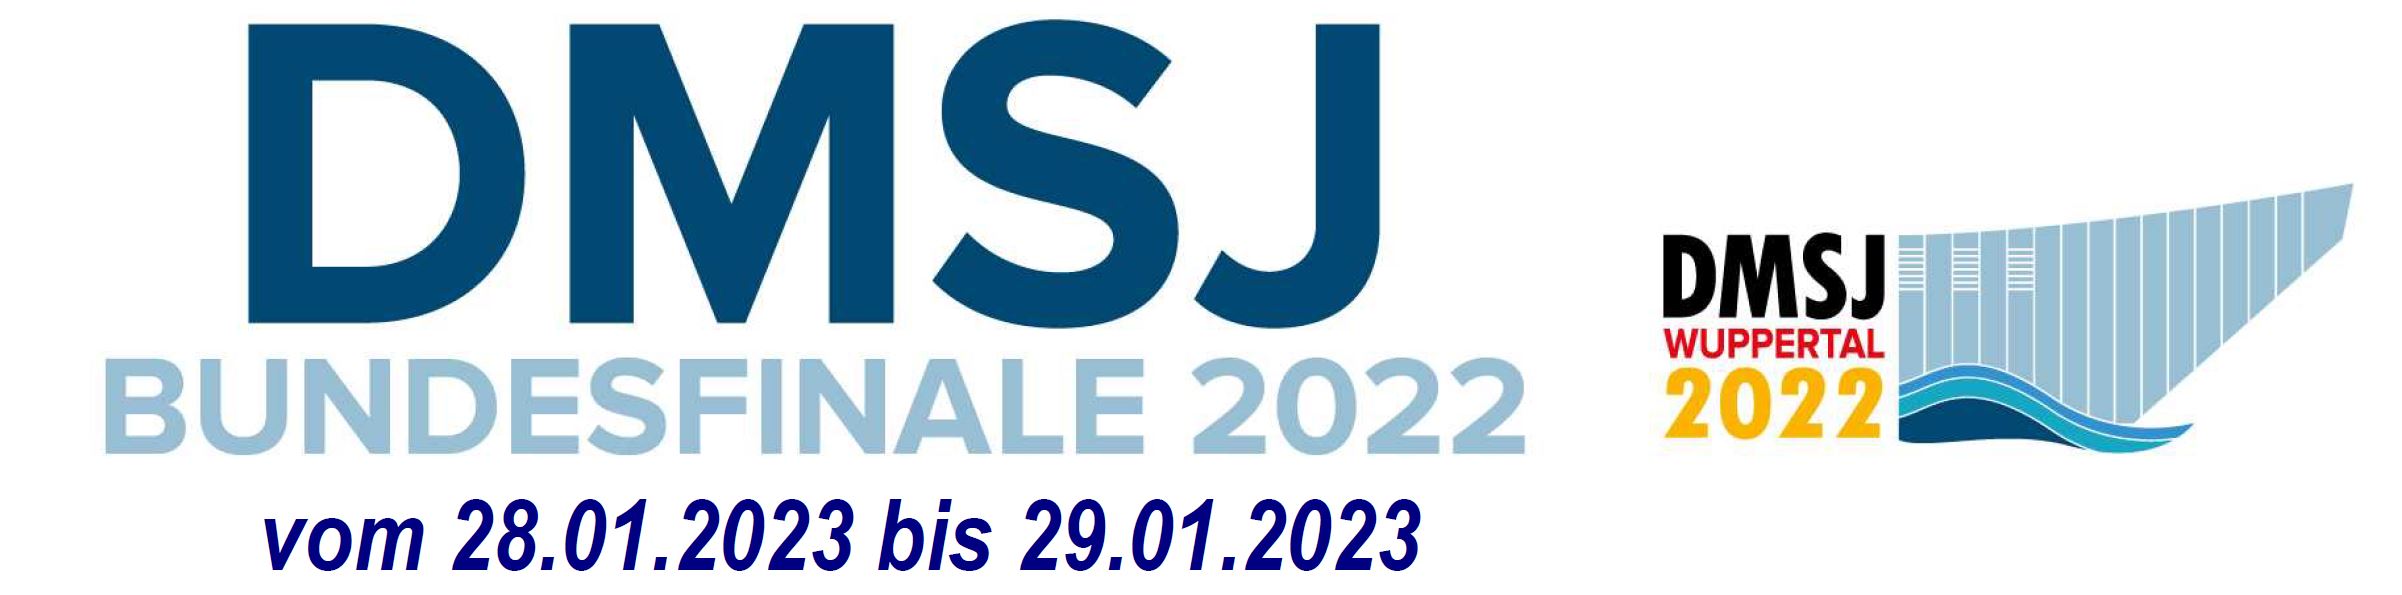 DMSJ_2022_logo